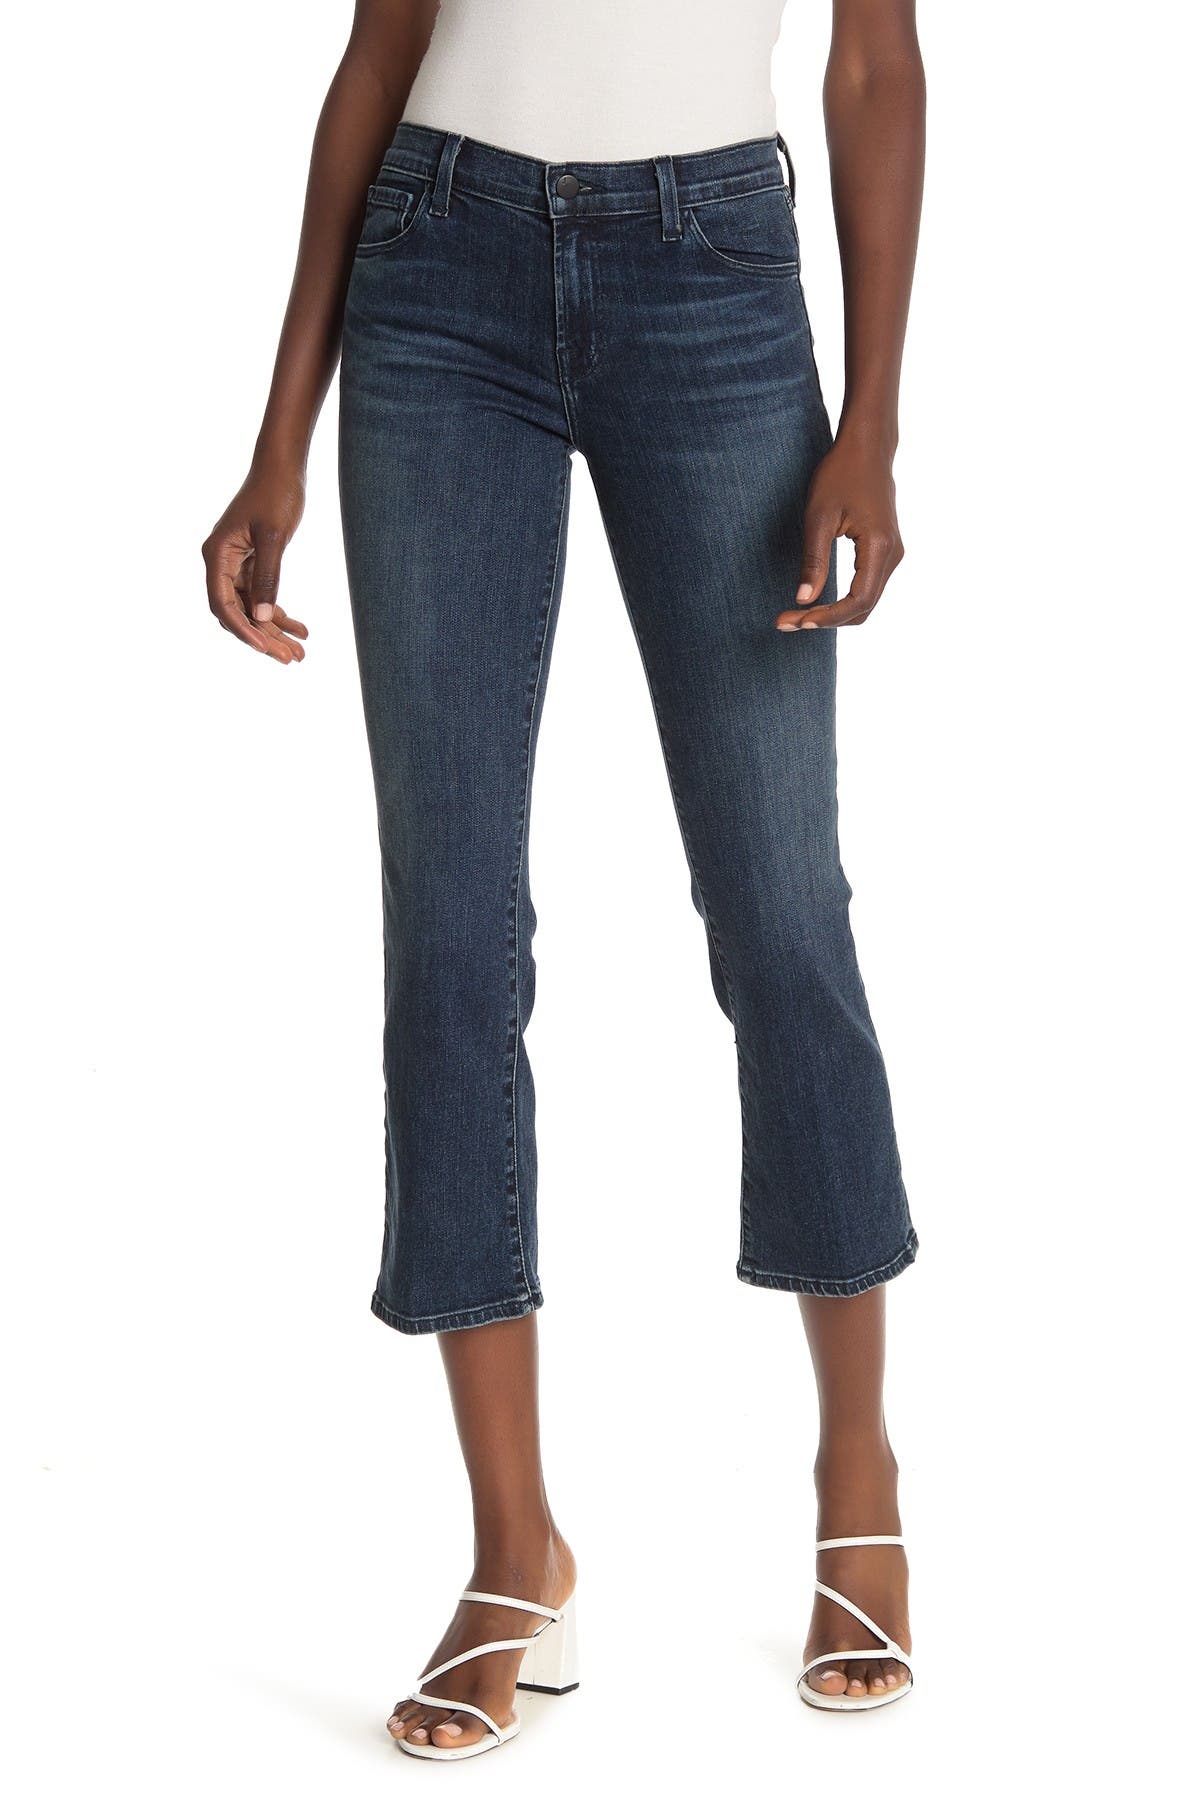 J Brand | Selena Crop Bootcut Jeans 